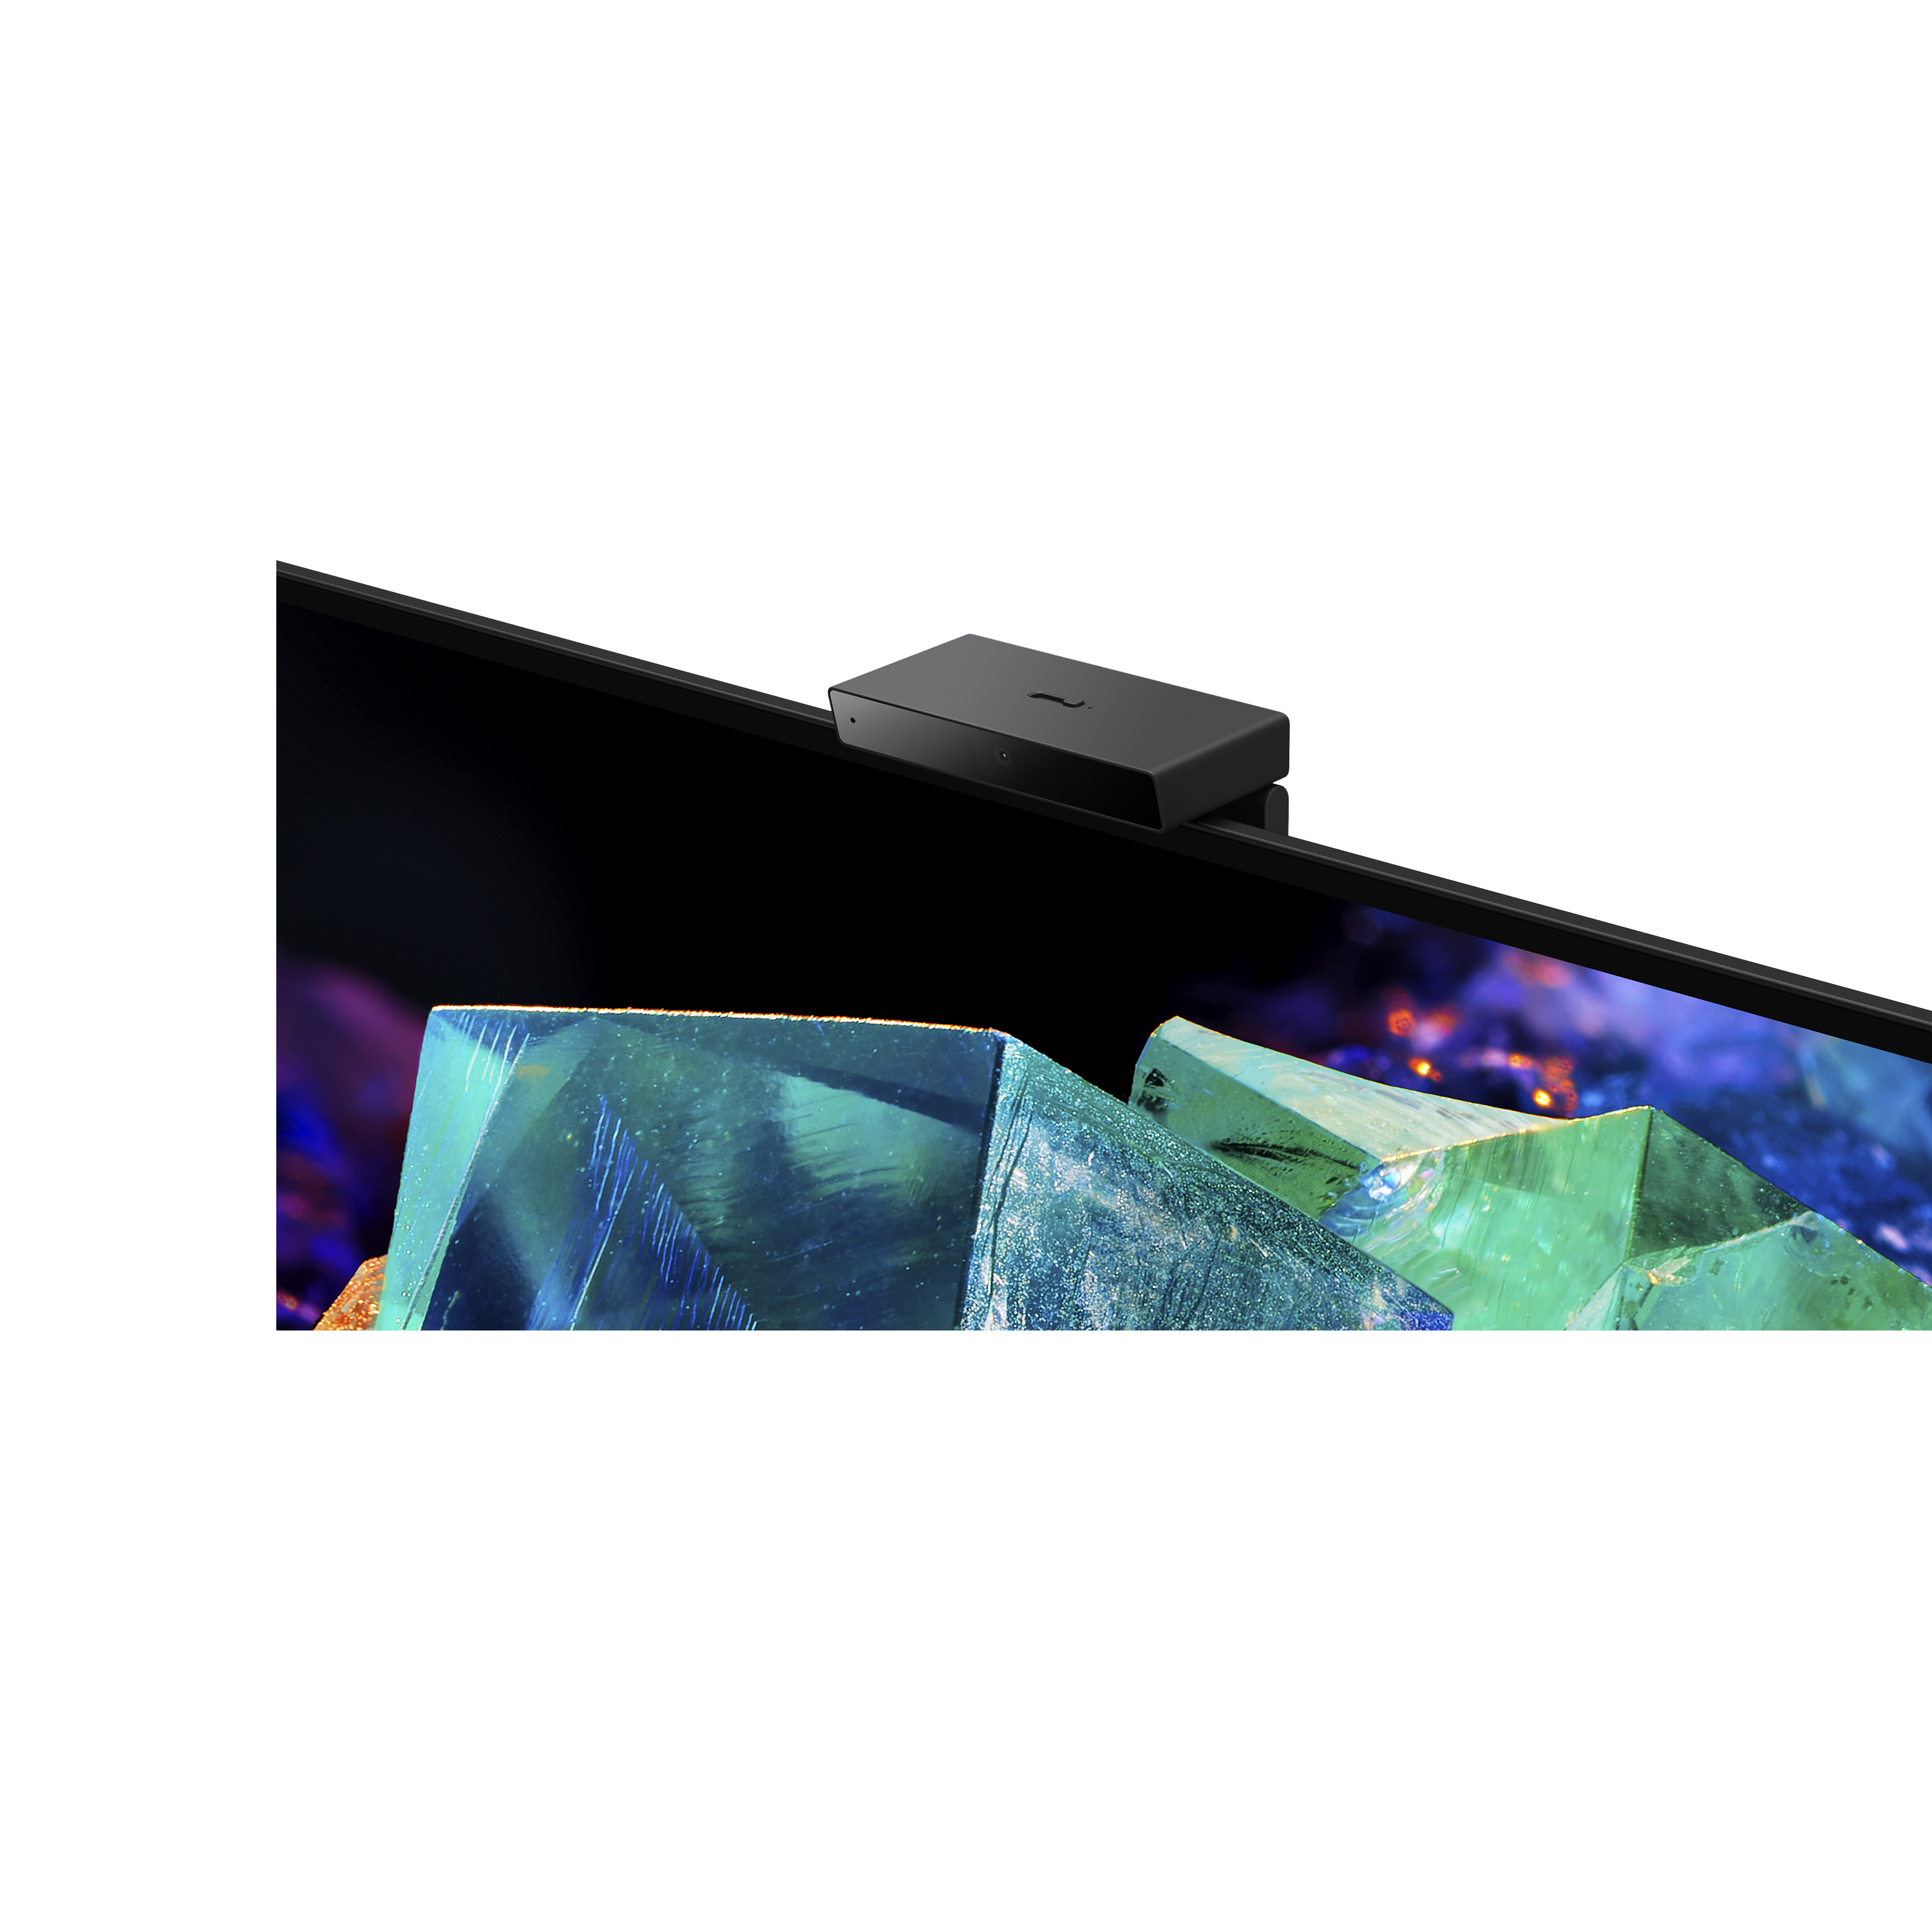 BRAVIA CAM 置於 BRAVIA A95K 上方的近拍照，螢幕上顯示色彩繽紛的玻璃和水晶影像